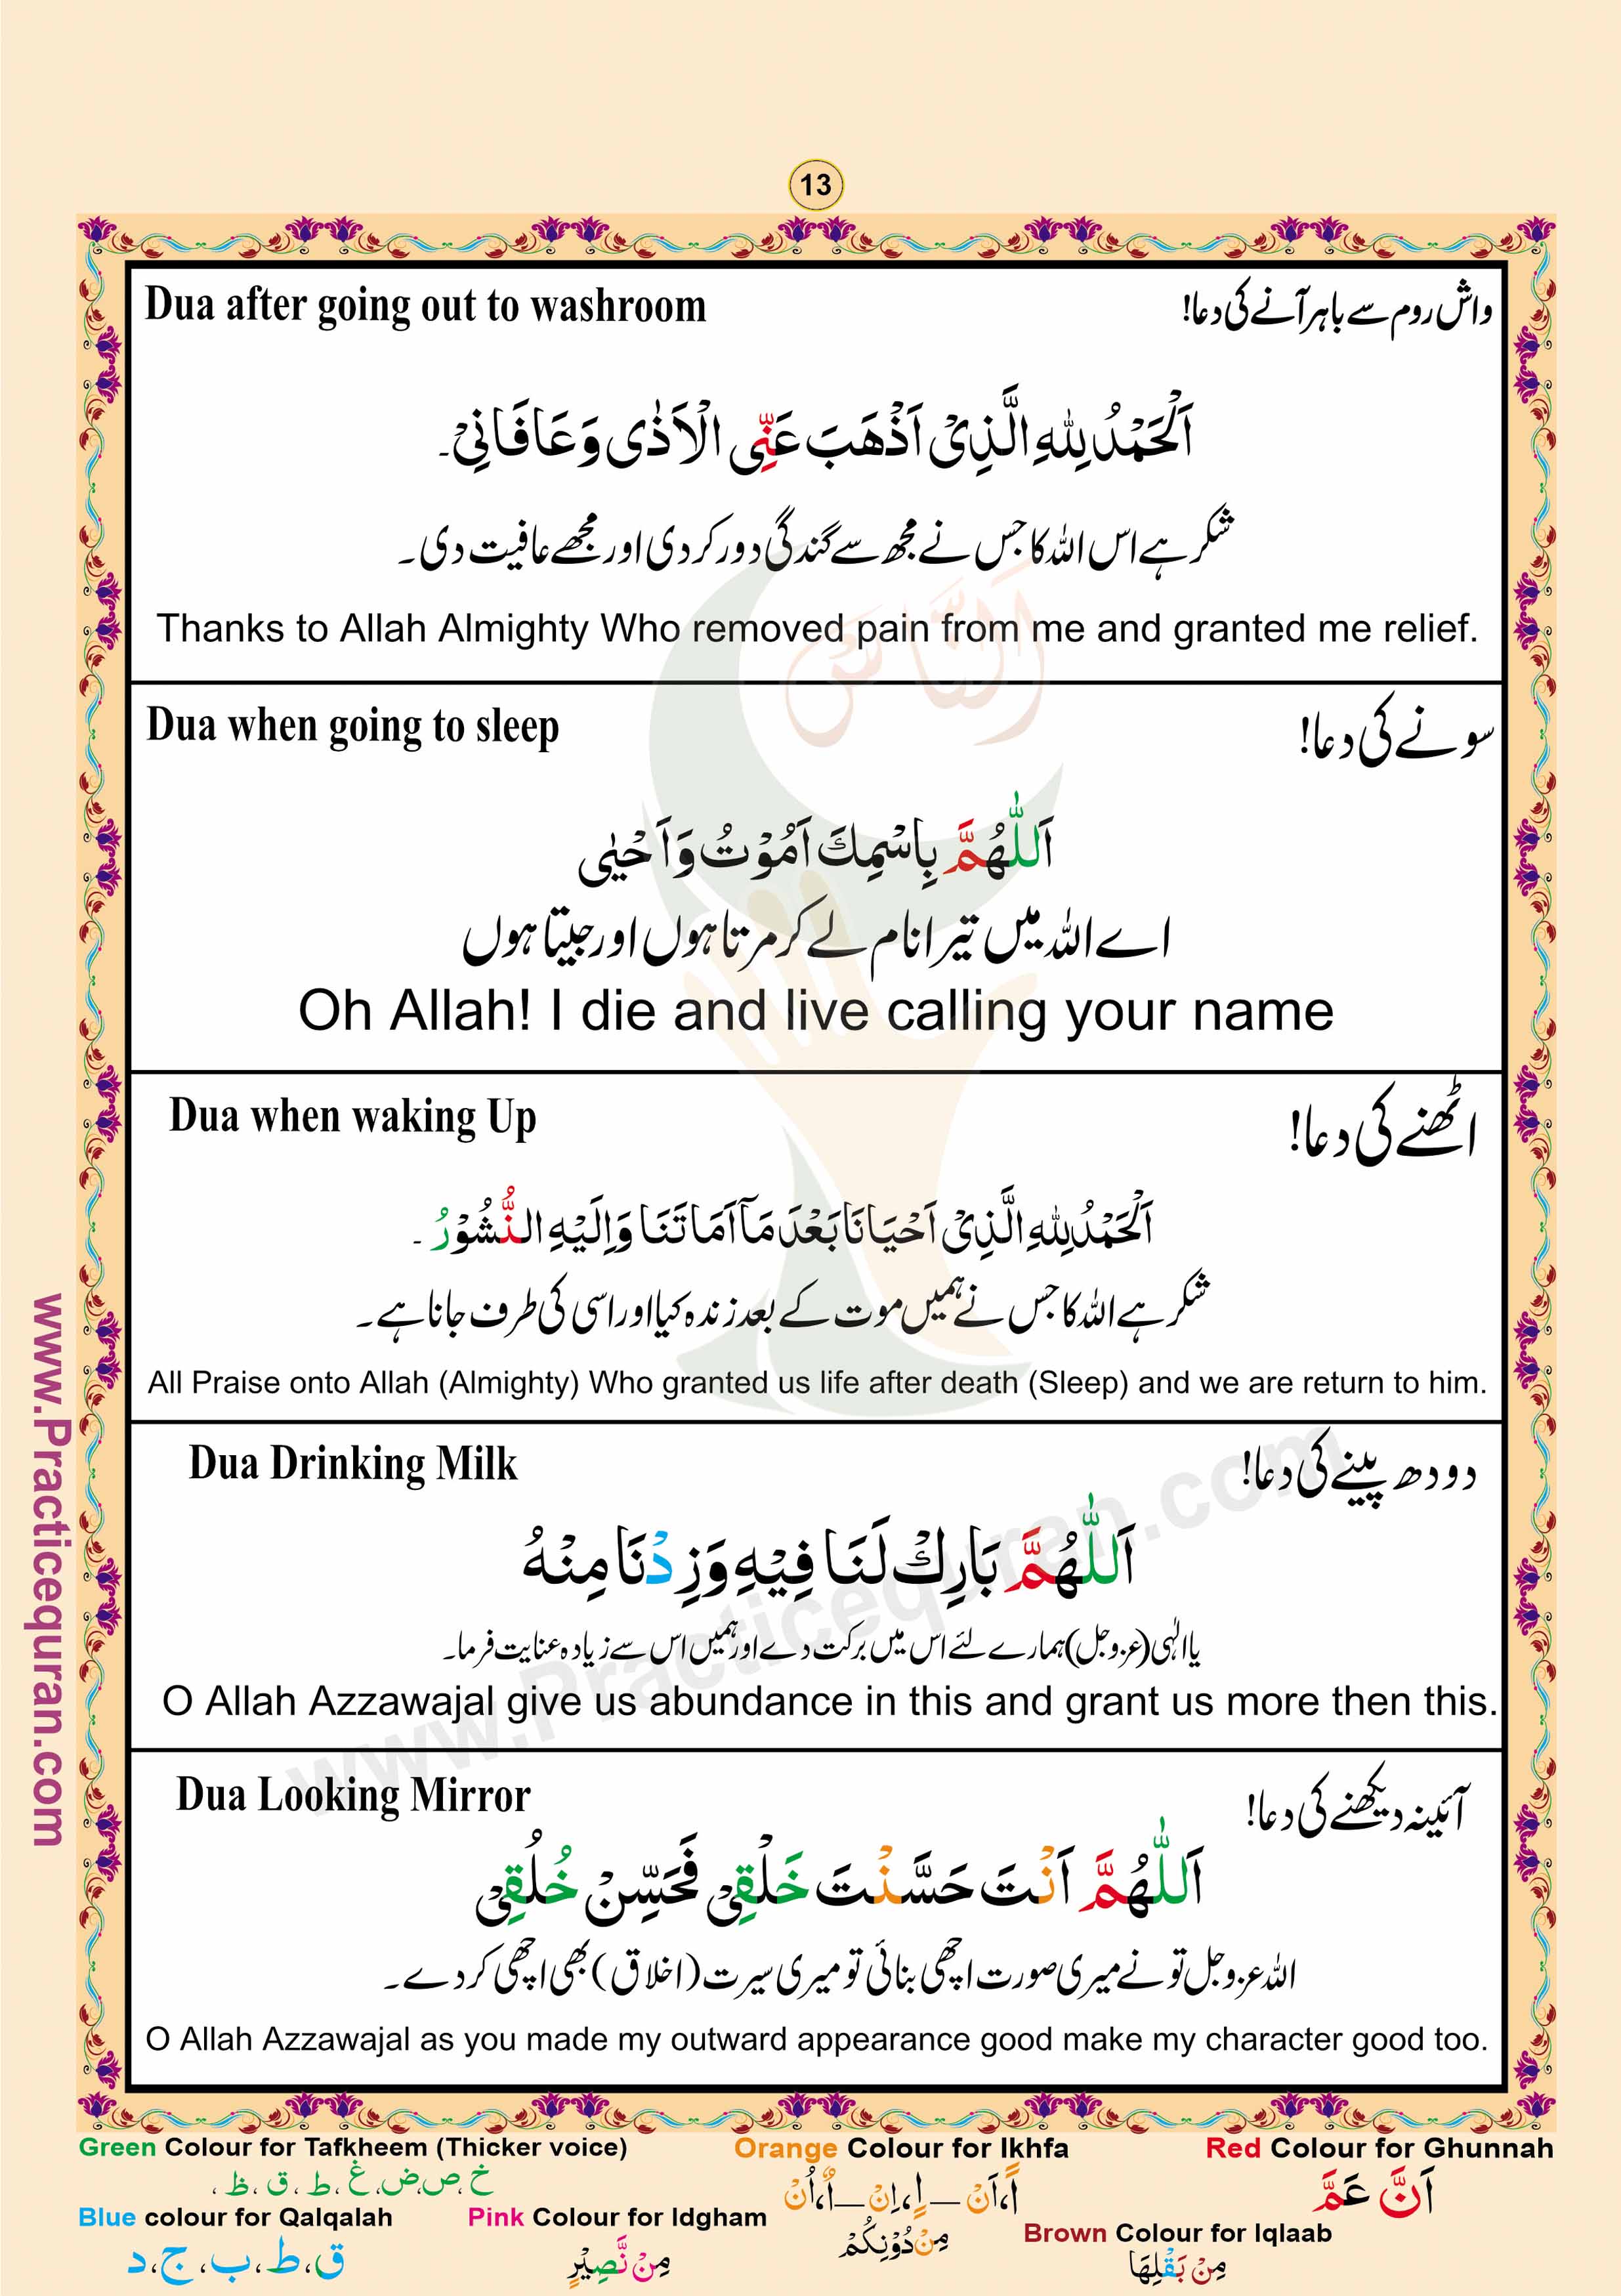 Read Namaz (Salah) Page No 13, Practice Quran